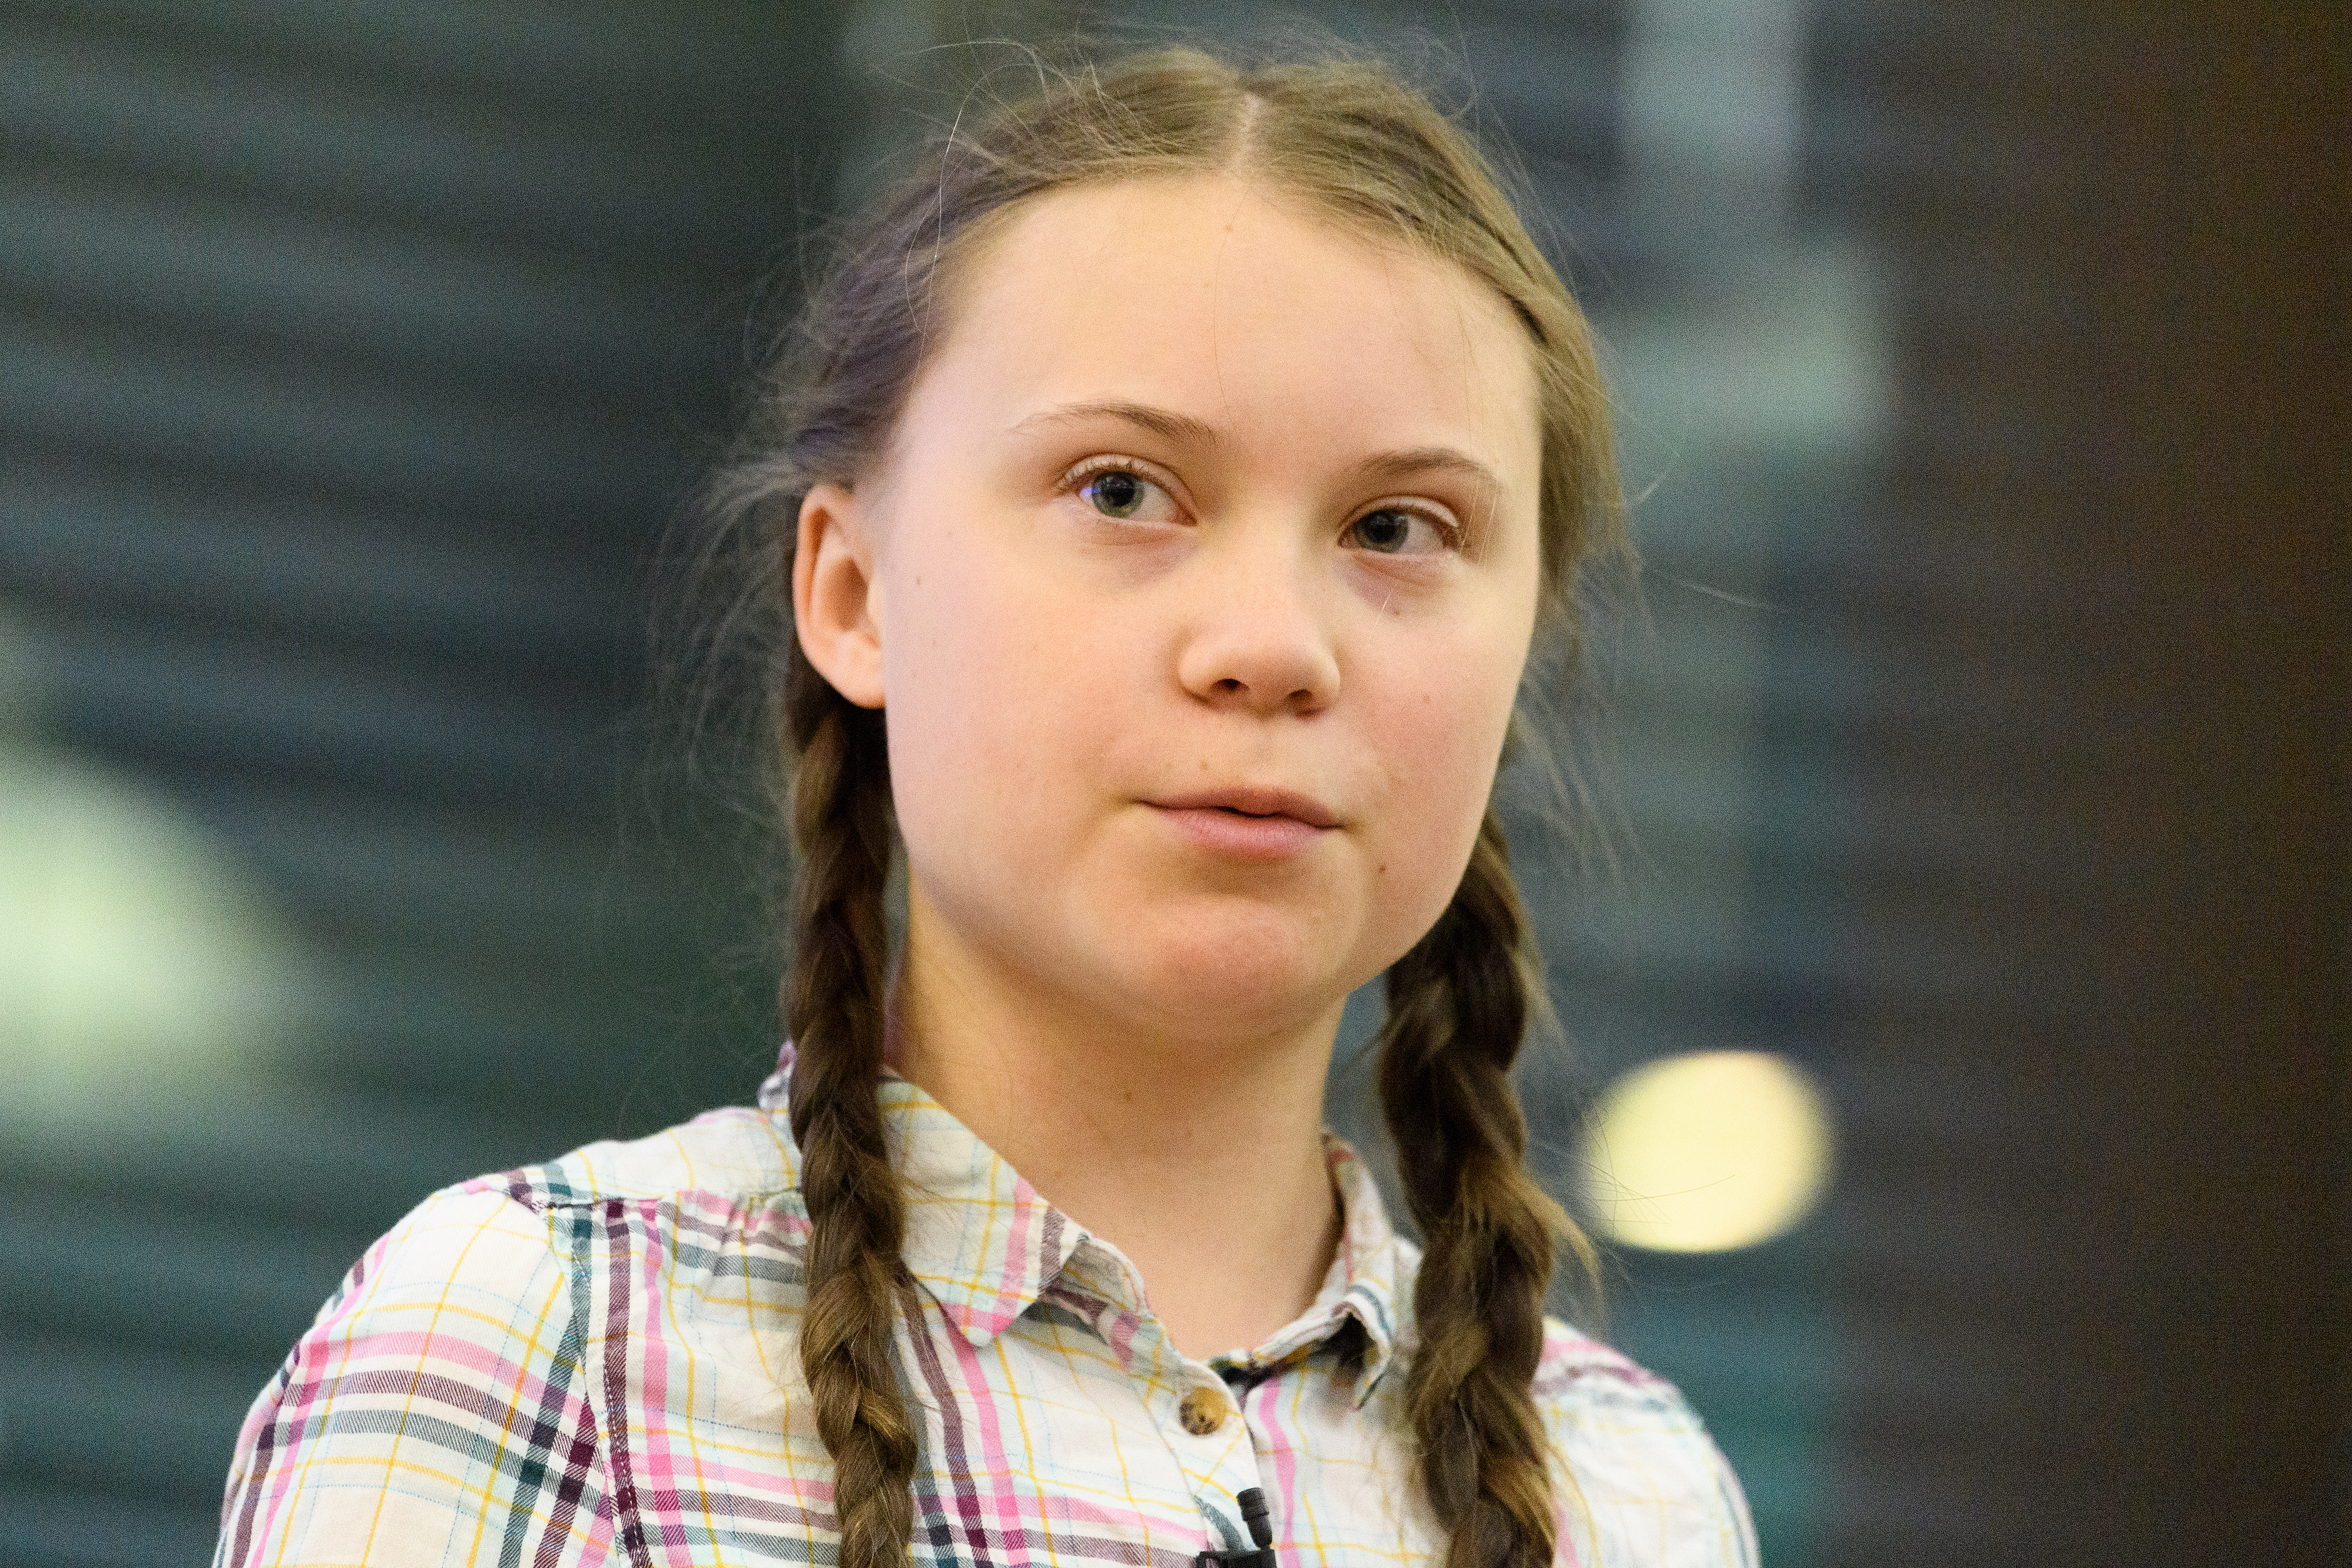 Swedish environmental campaigner Greta Thunberg